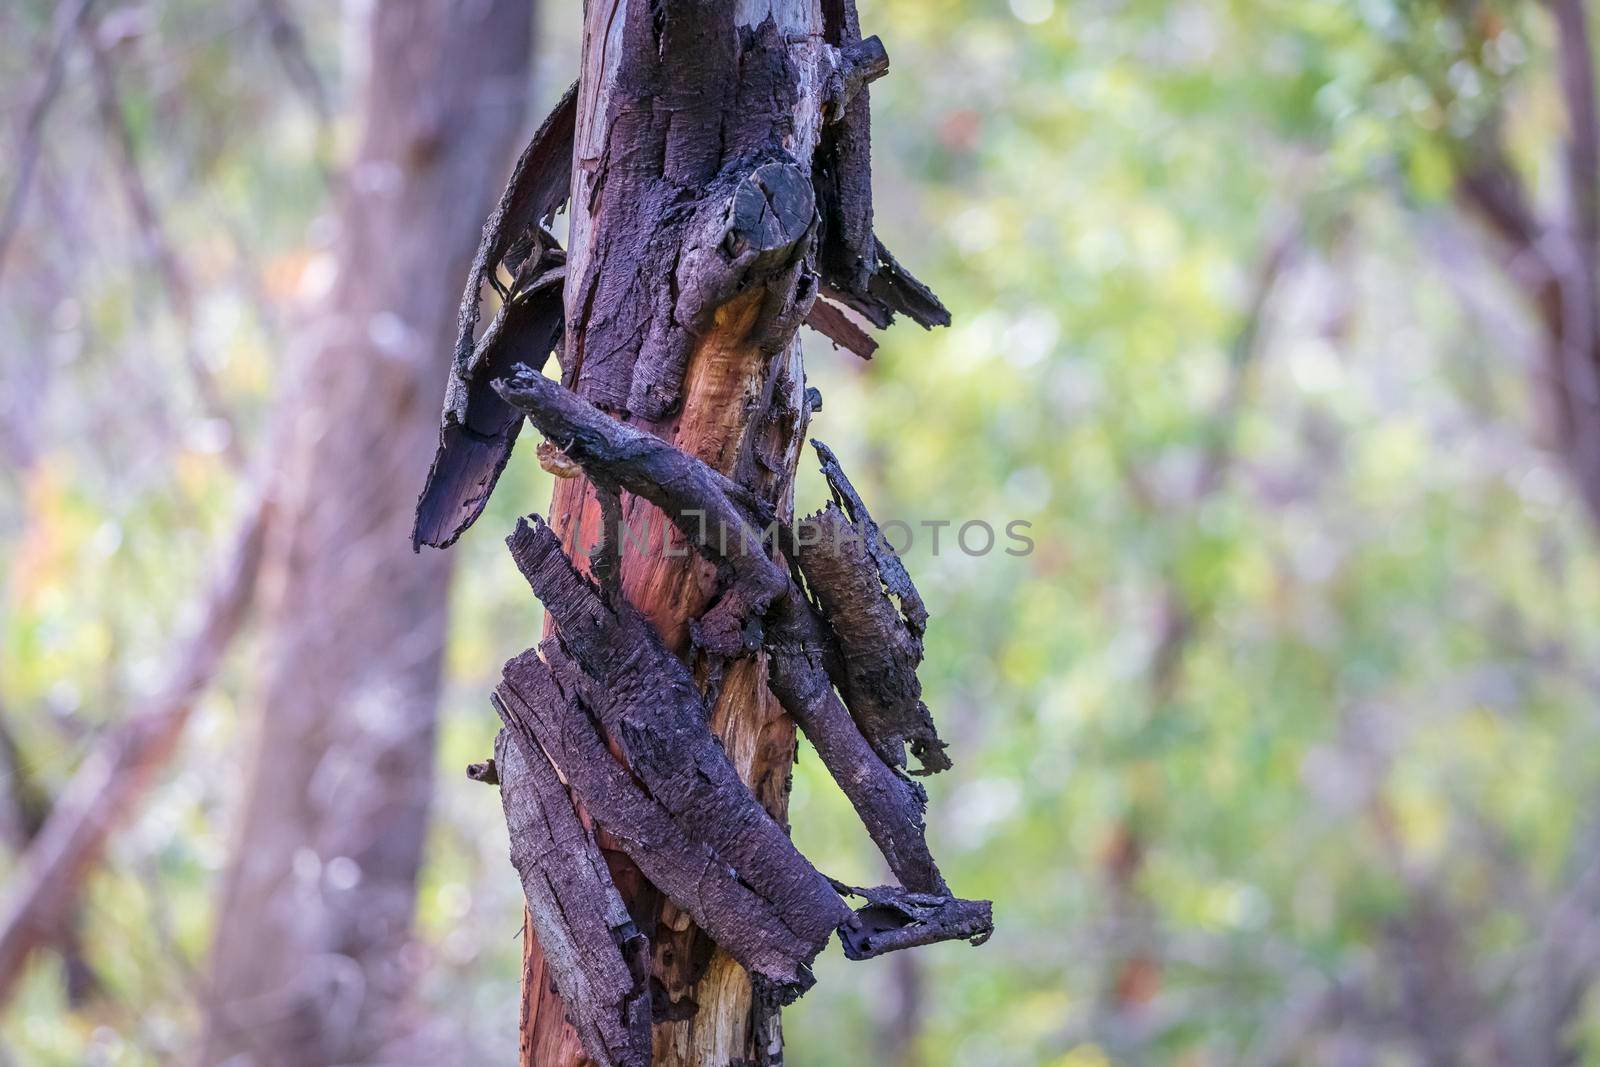 A gum tree burnt by bushfire in regional Australia by WittkePhotos